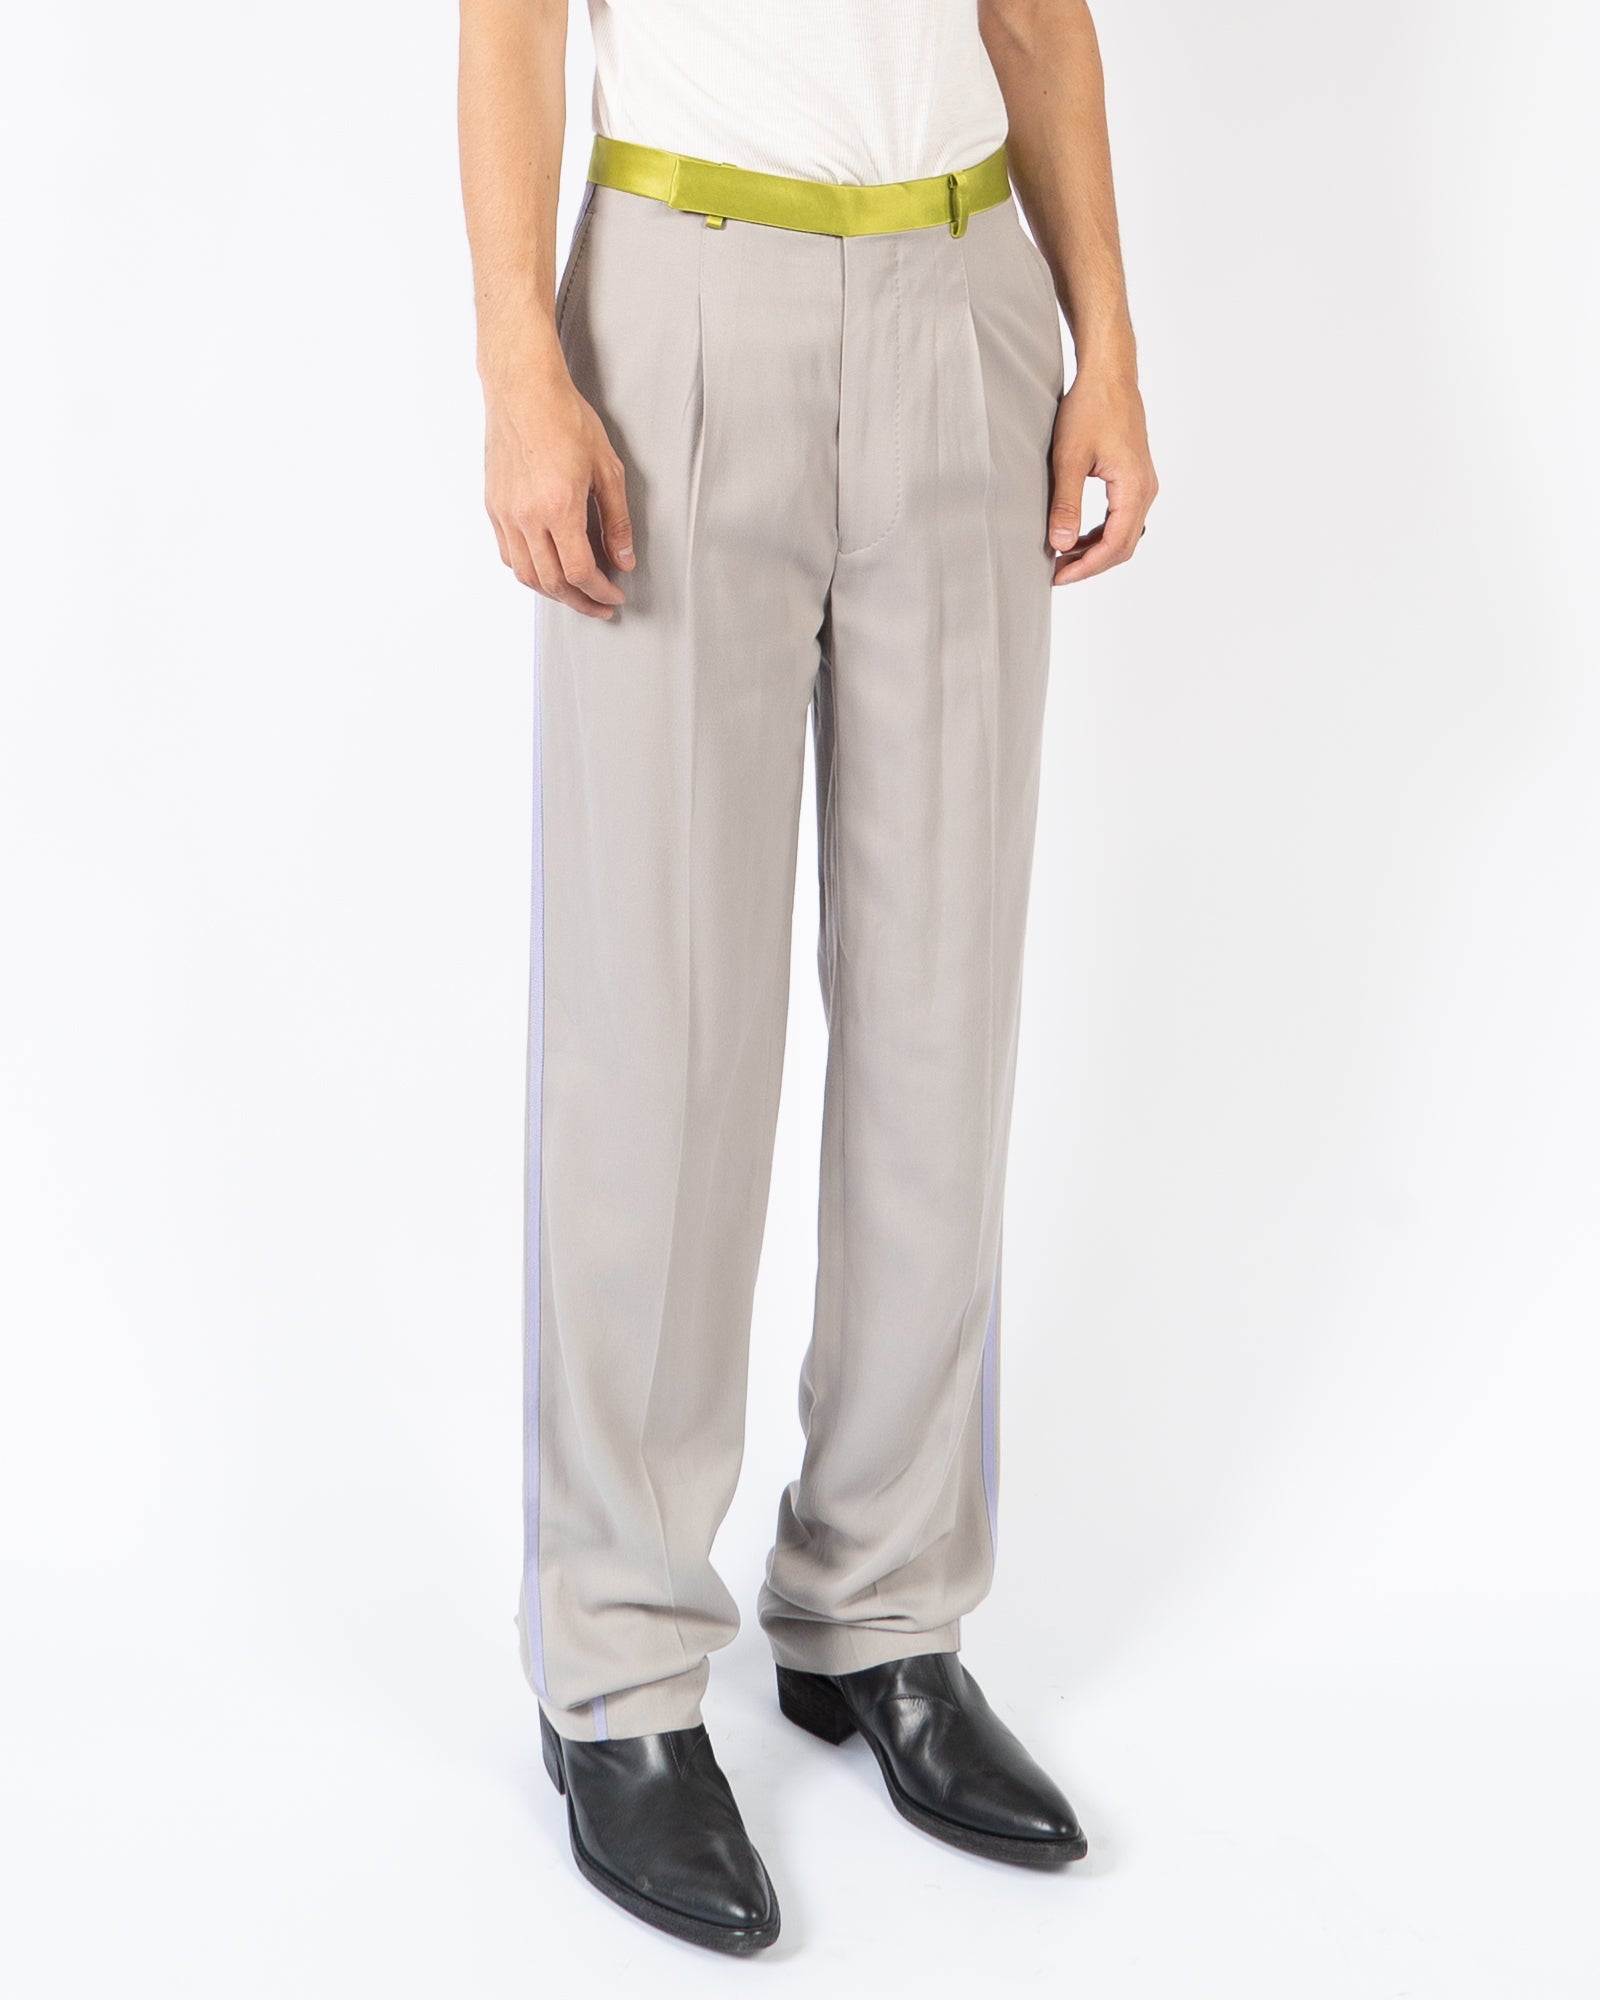 SS20 Grey Trousers with Green Taroni Waist